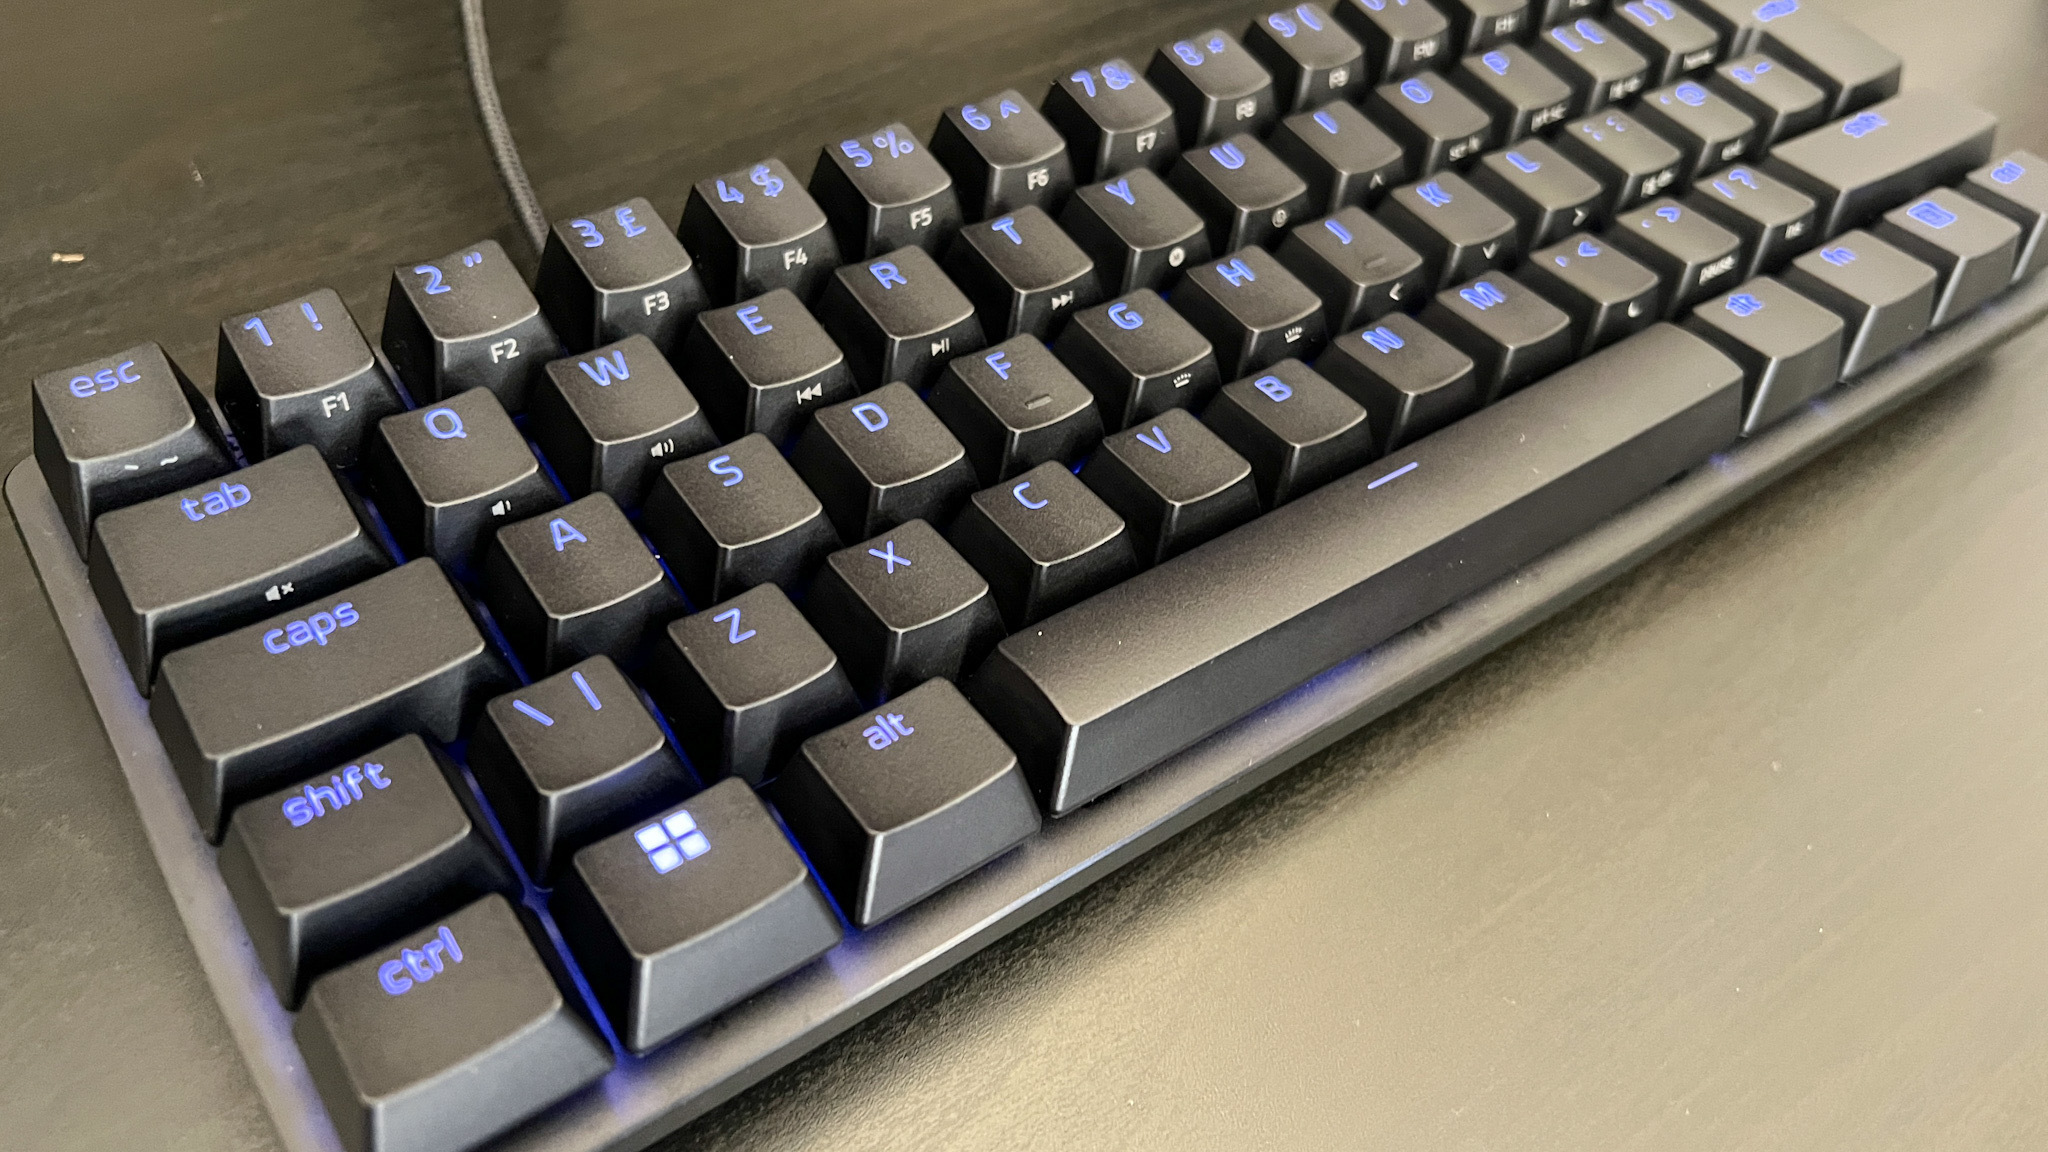 60% Small Gaming Keyboard - Razer Huntsman Mini